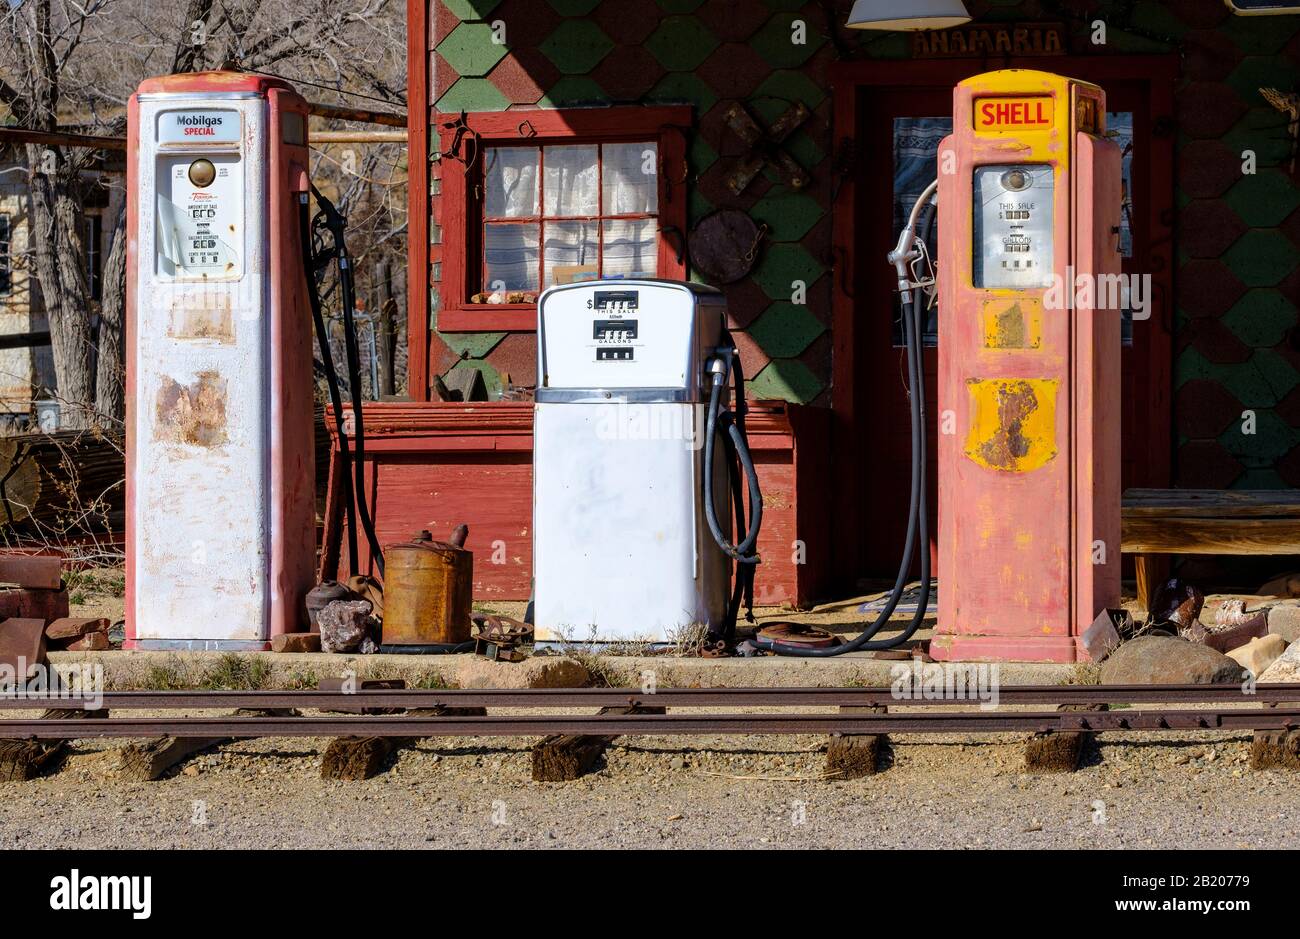 Gaspumpen in Chloride, Arizona, 86431, USA. Stockfoto